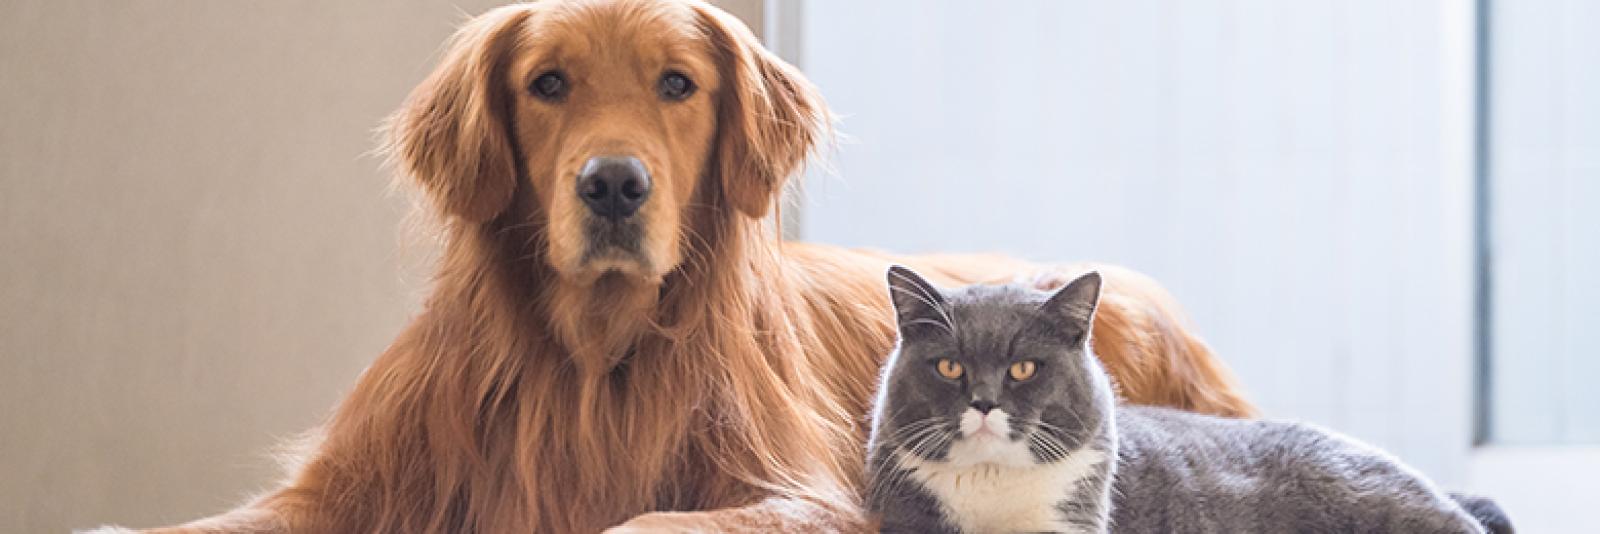 Lauw Bloody hengel Max en Pip populairste namen hond en kat - NH Nieuws